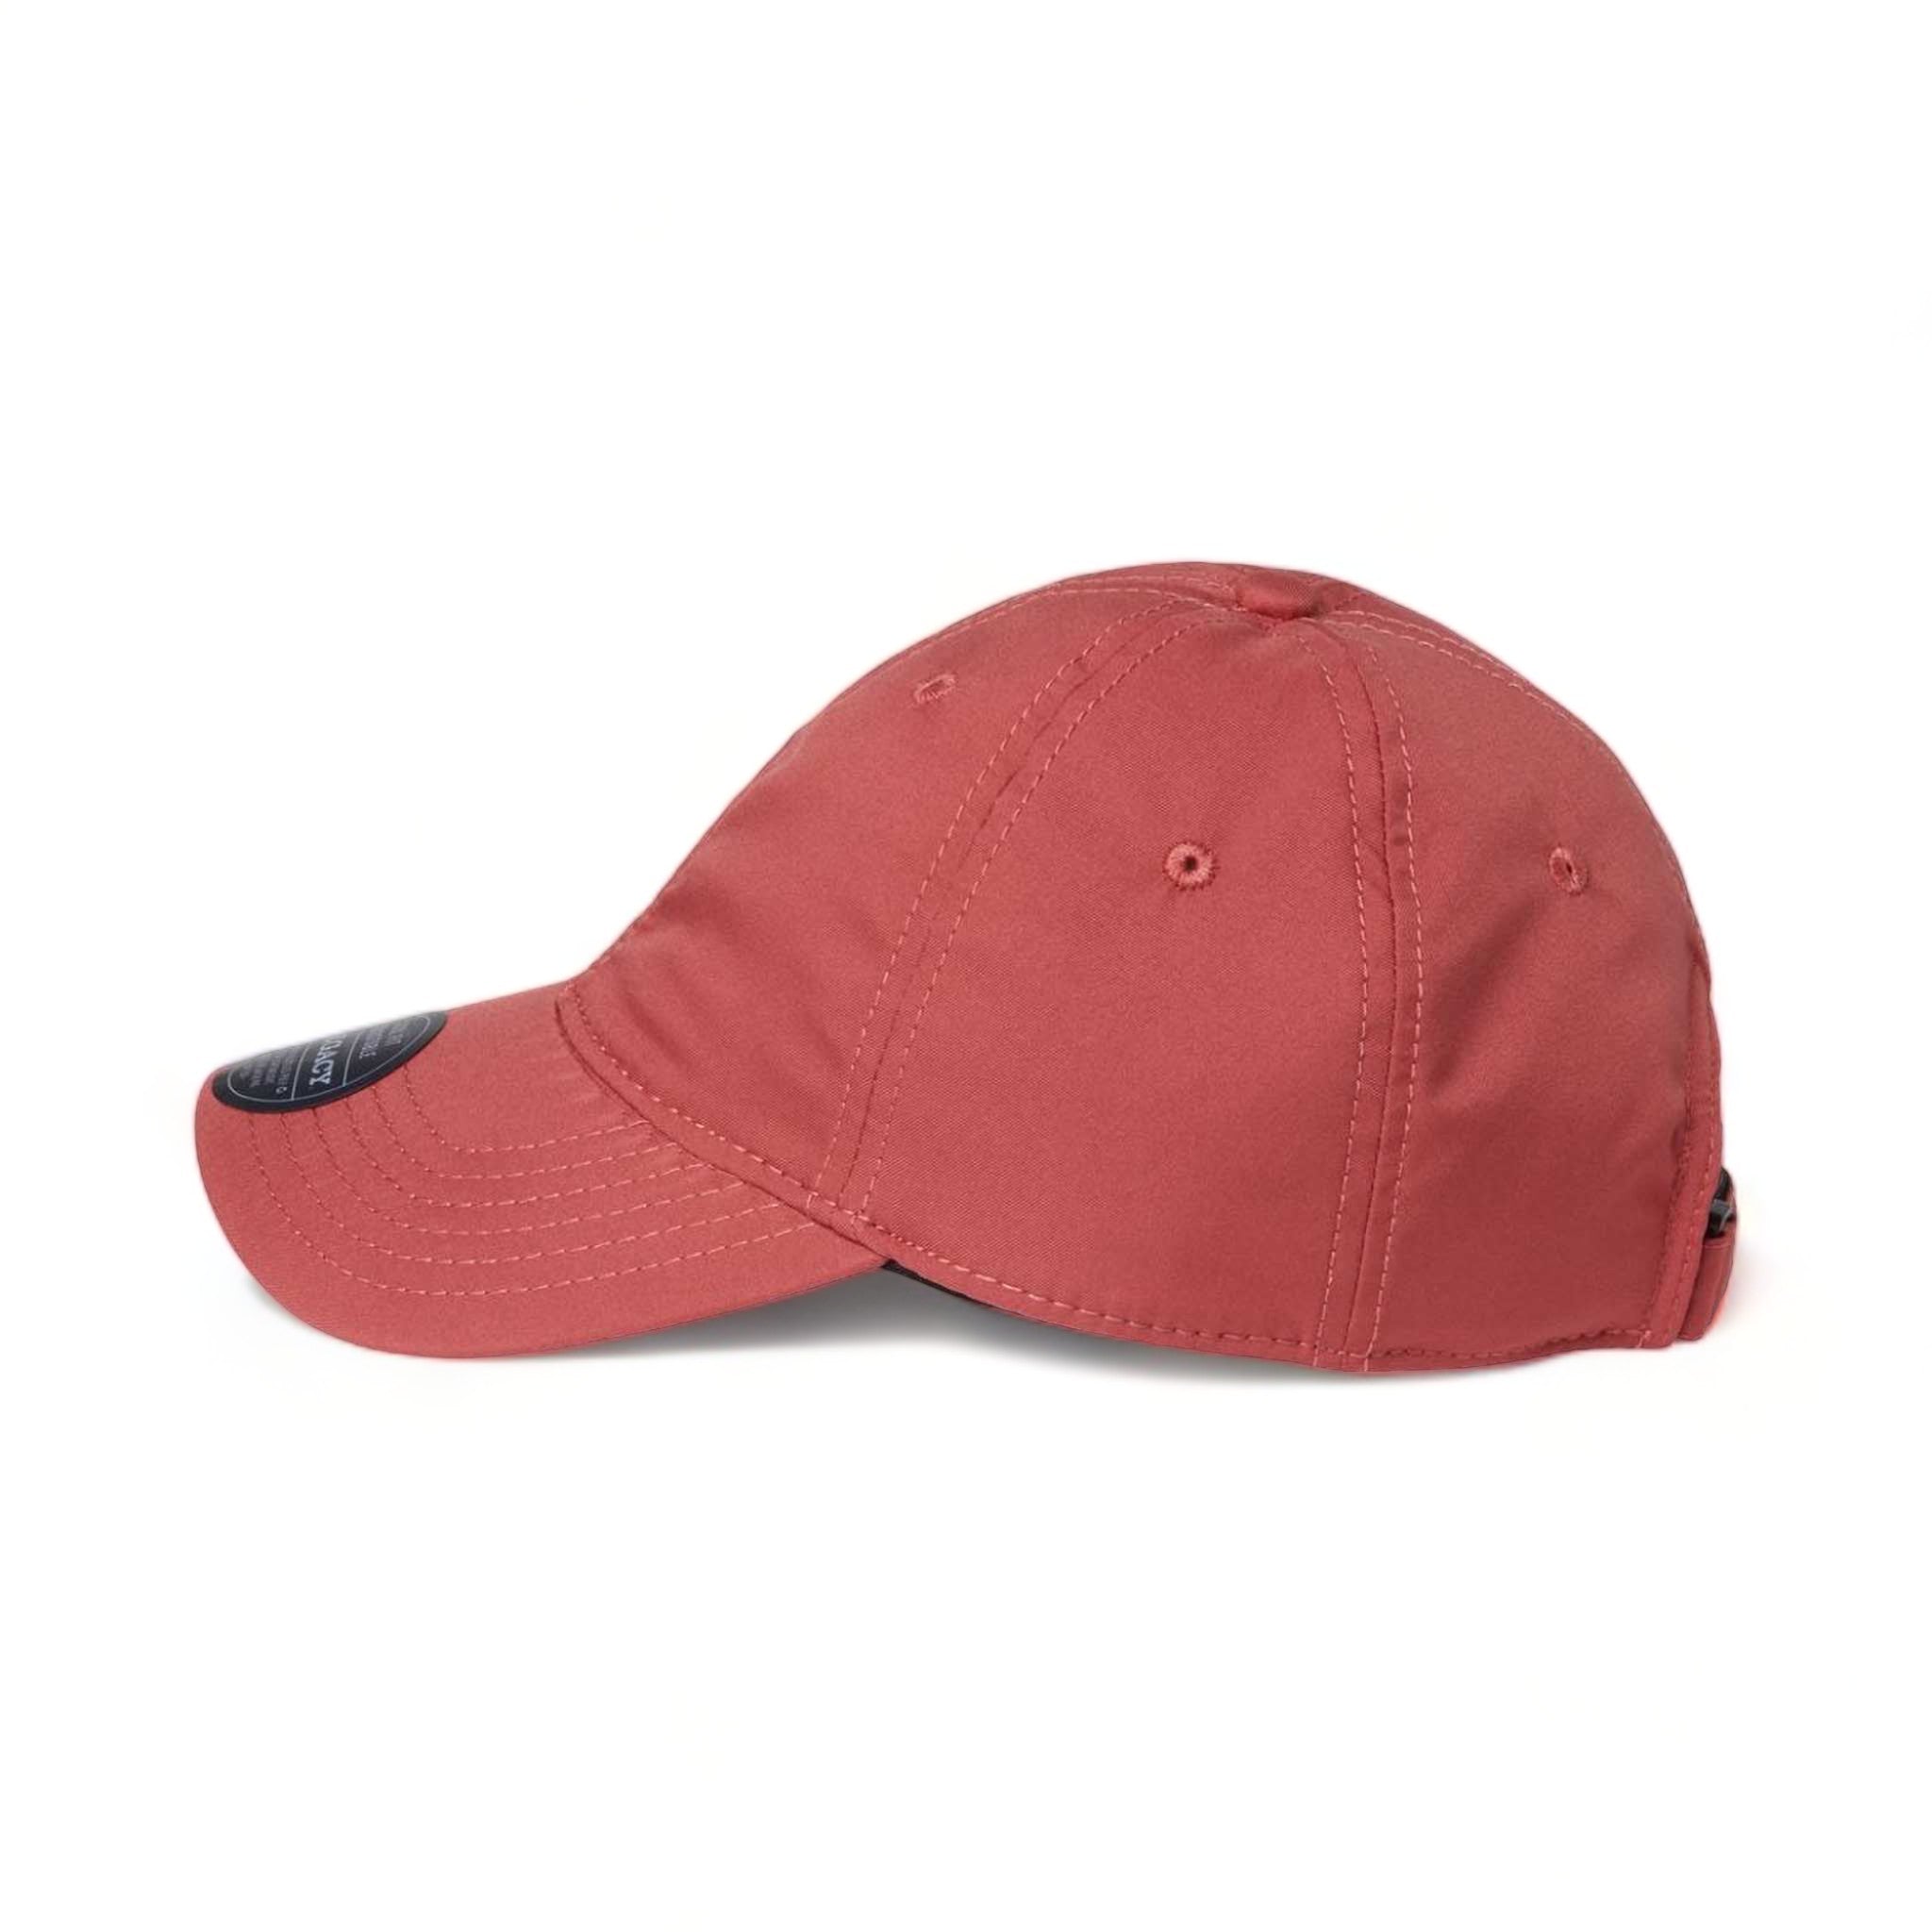 Side view of LEGACY CFA custom hat in nantucket red